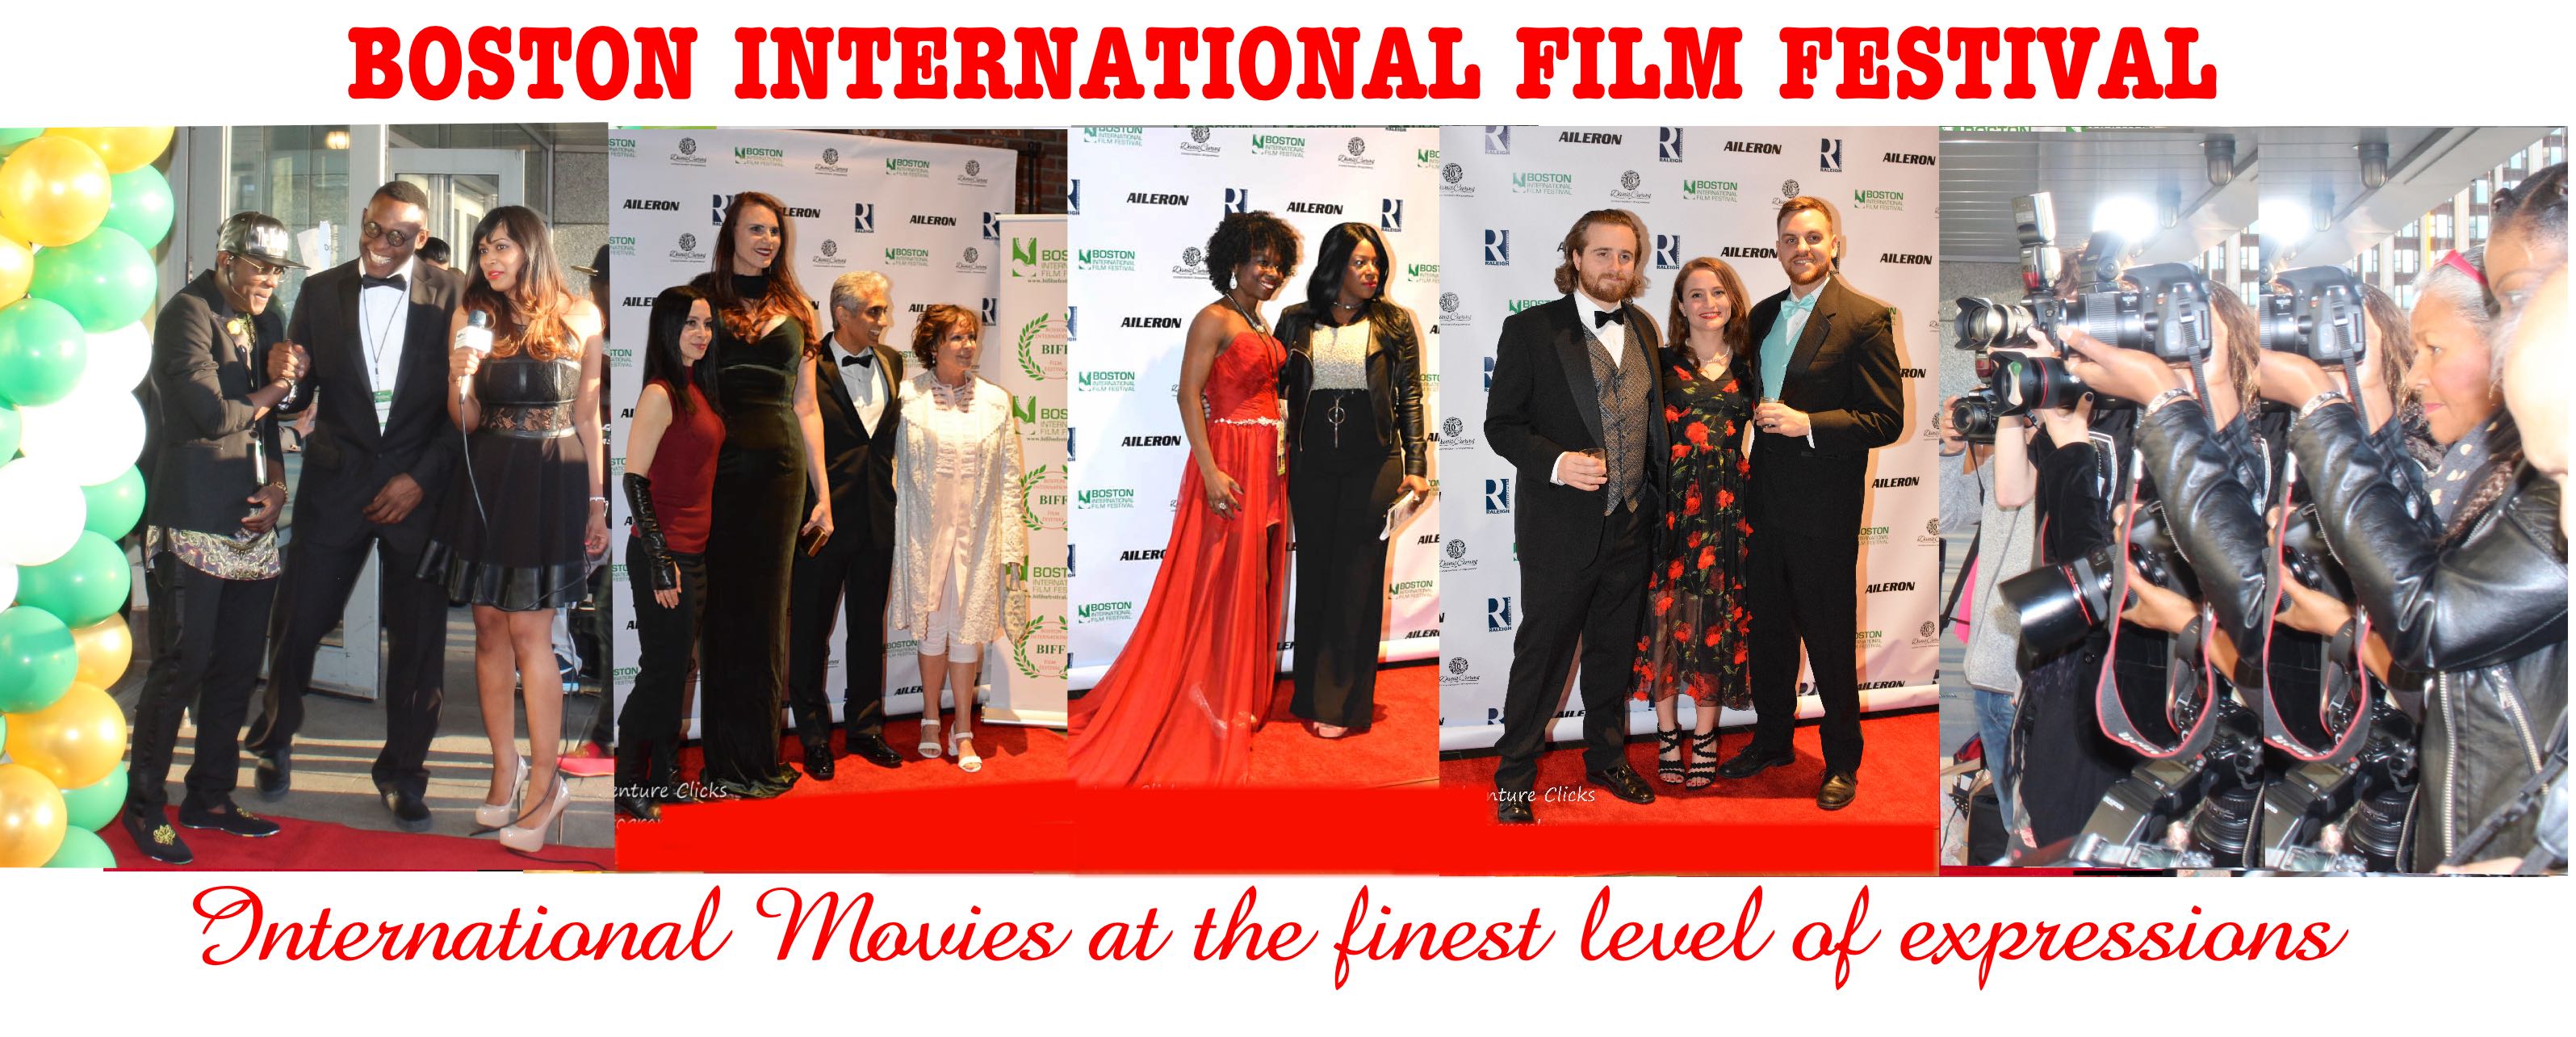 Boston International Film Festival BostoninterFF INTERNATIONAL